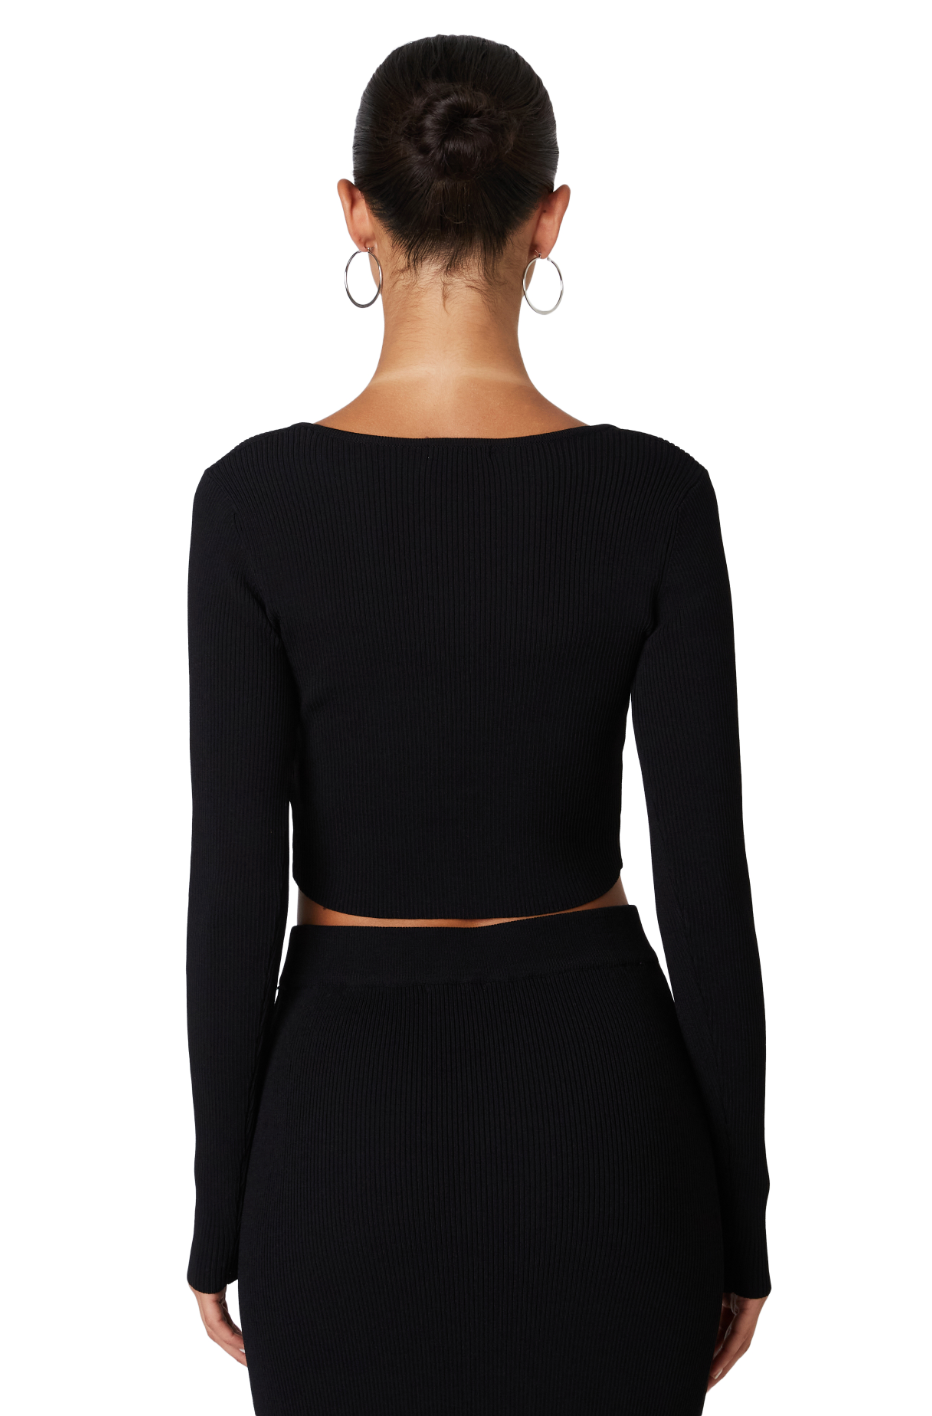 Monmartre Sweater Top Black, Long Blouse by Nia | LIT Boutique